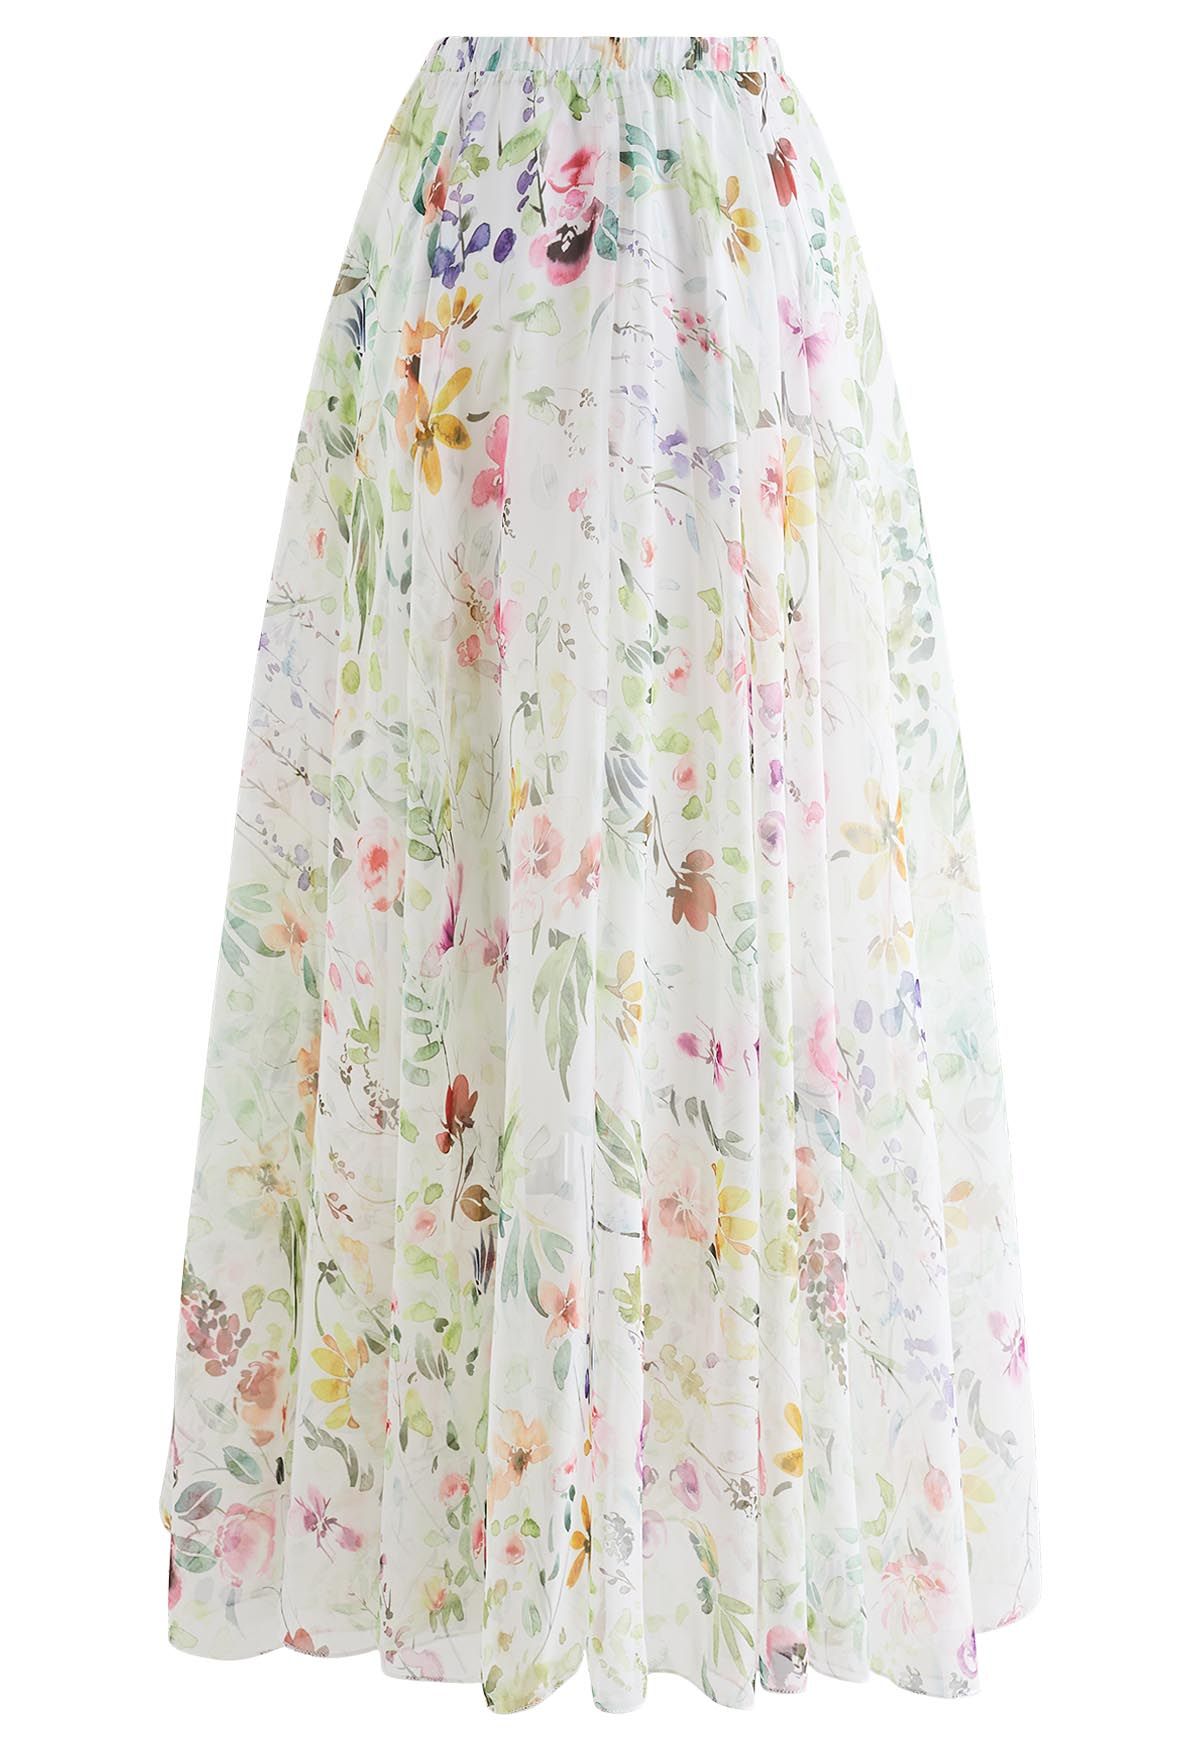 Watercolor Wild Flowers Printed Chiffon Maxi Skirt